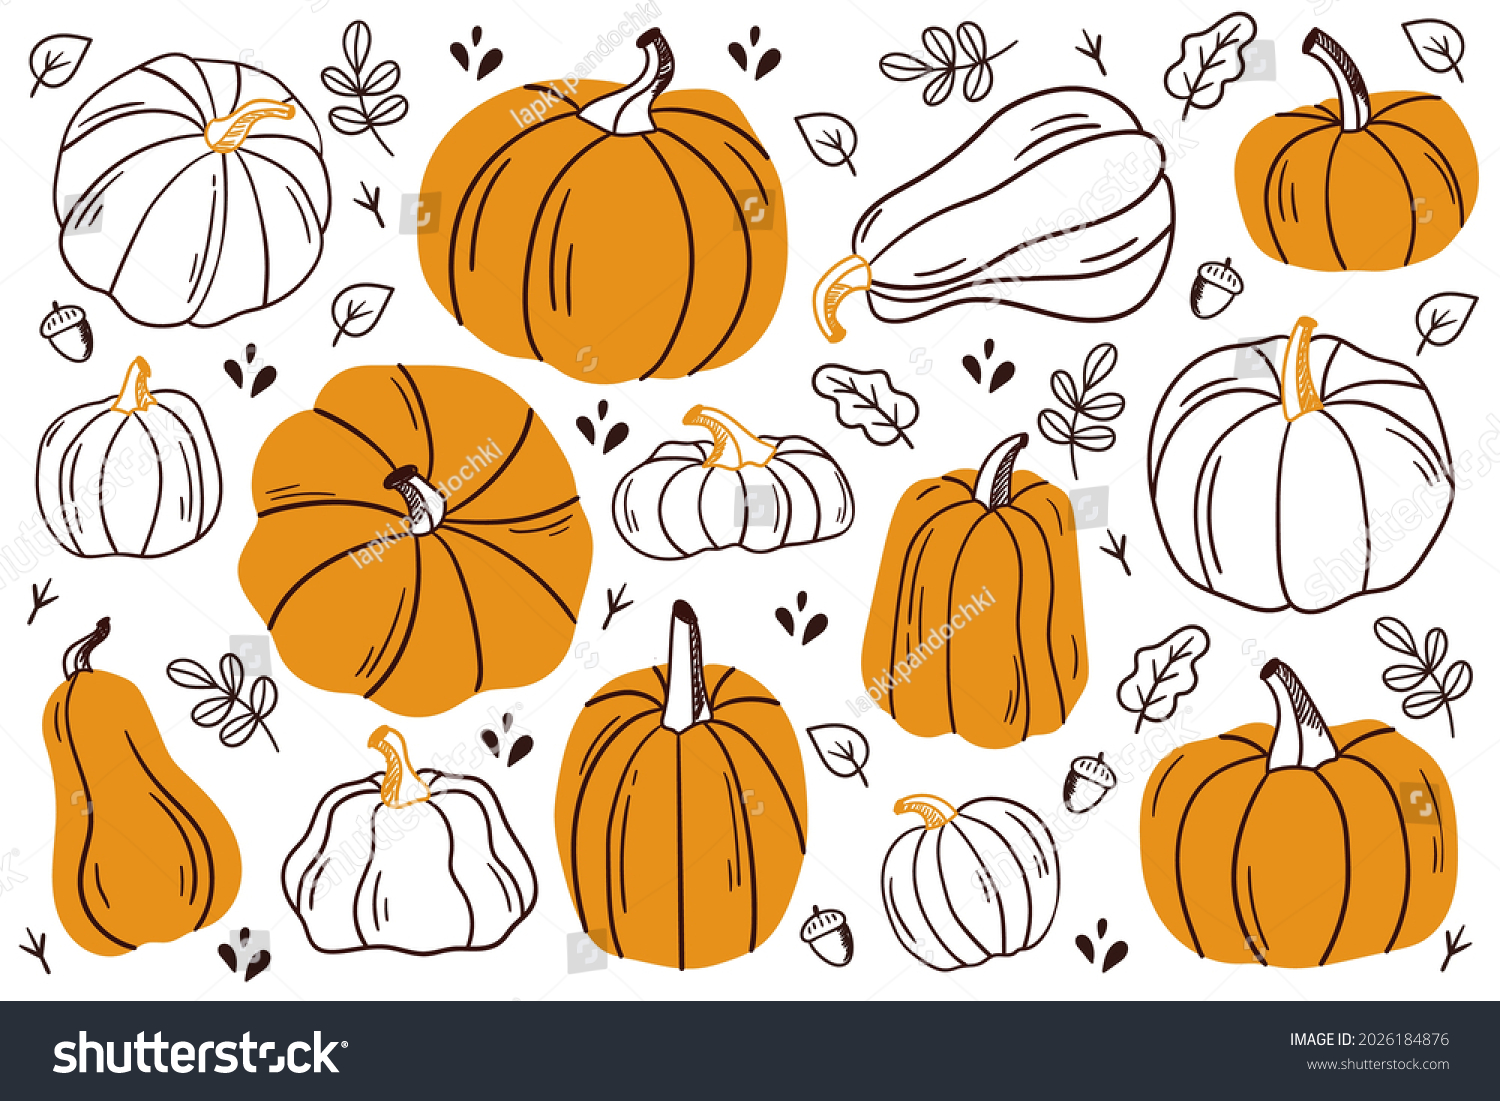 Set of pumpkins. Pumpkin of different shapes and colors.
Thanksgiving design. Autumn pumpkin #2026184876